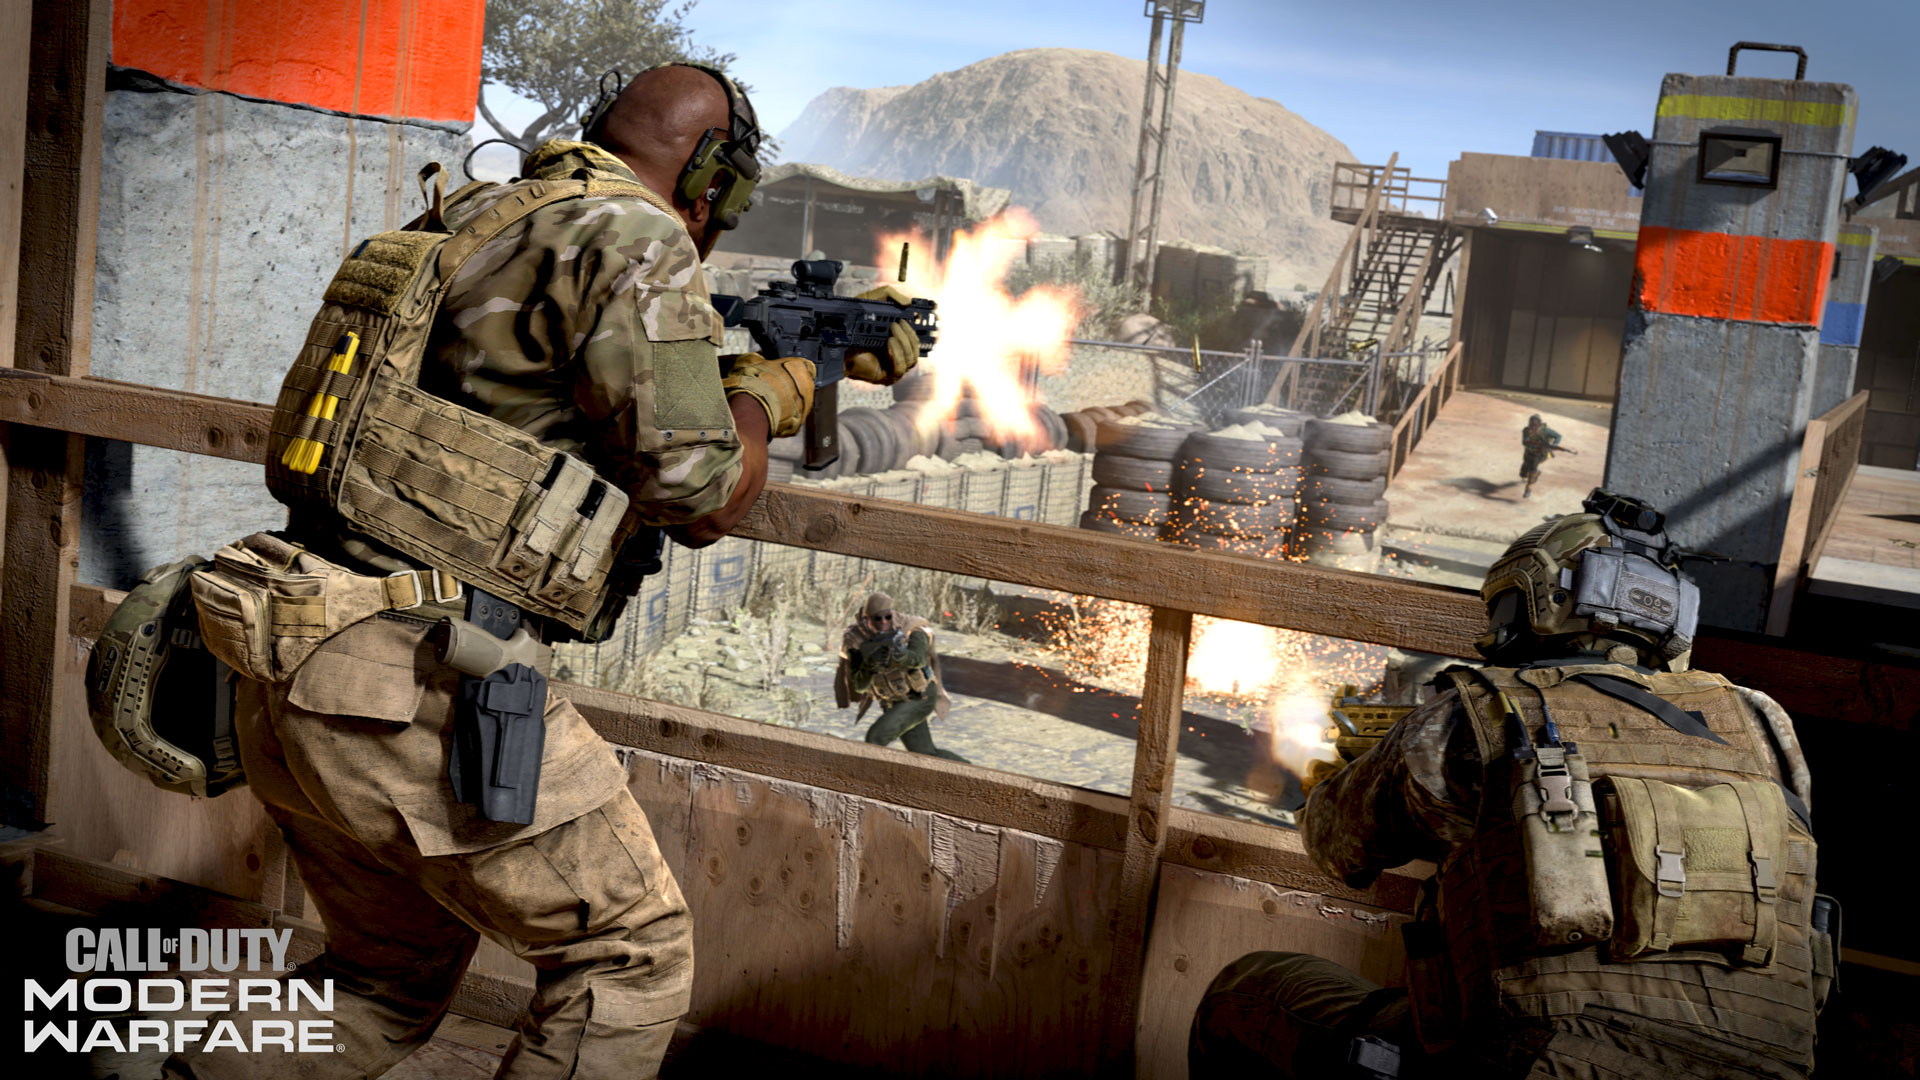 Future Call of Duty: Modern Warfare updates will tweak ... - 